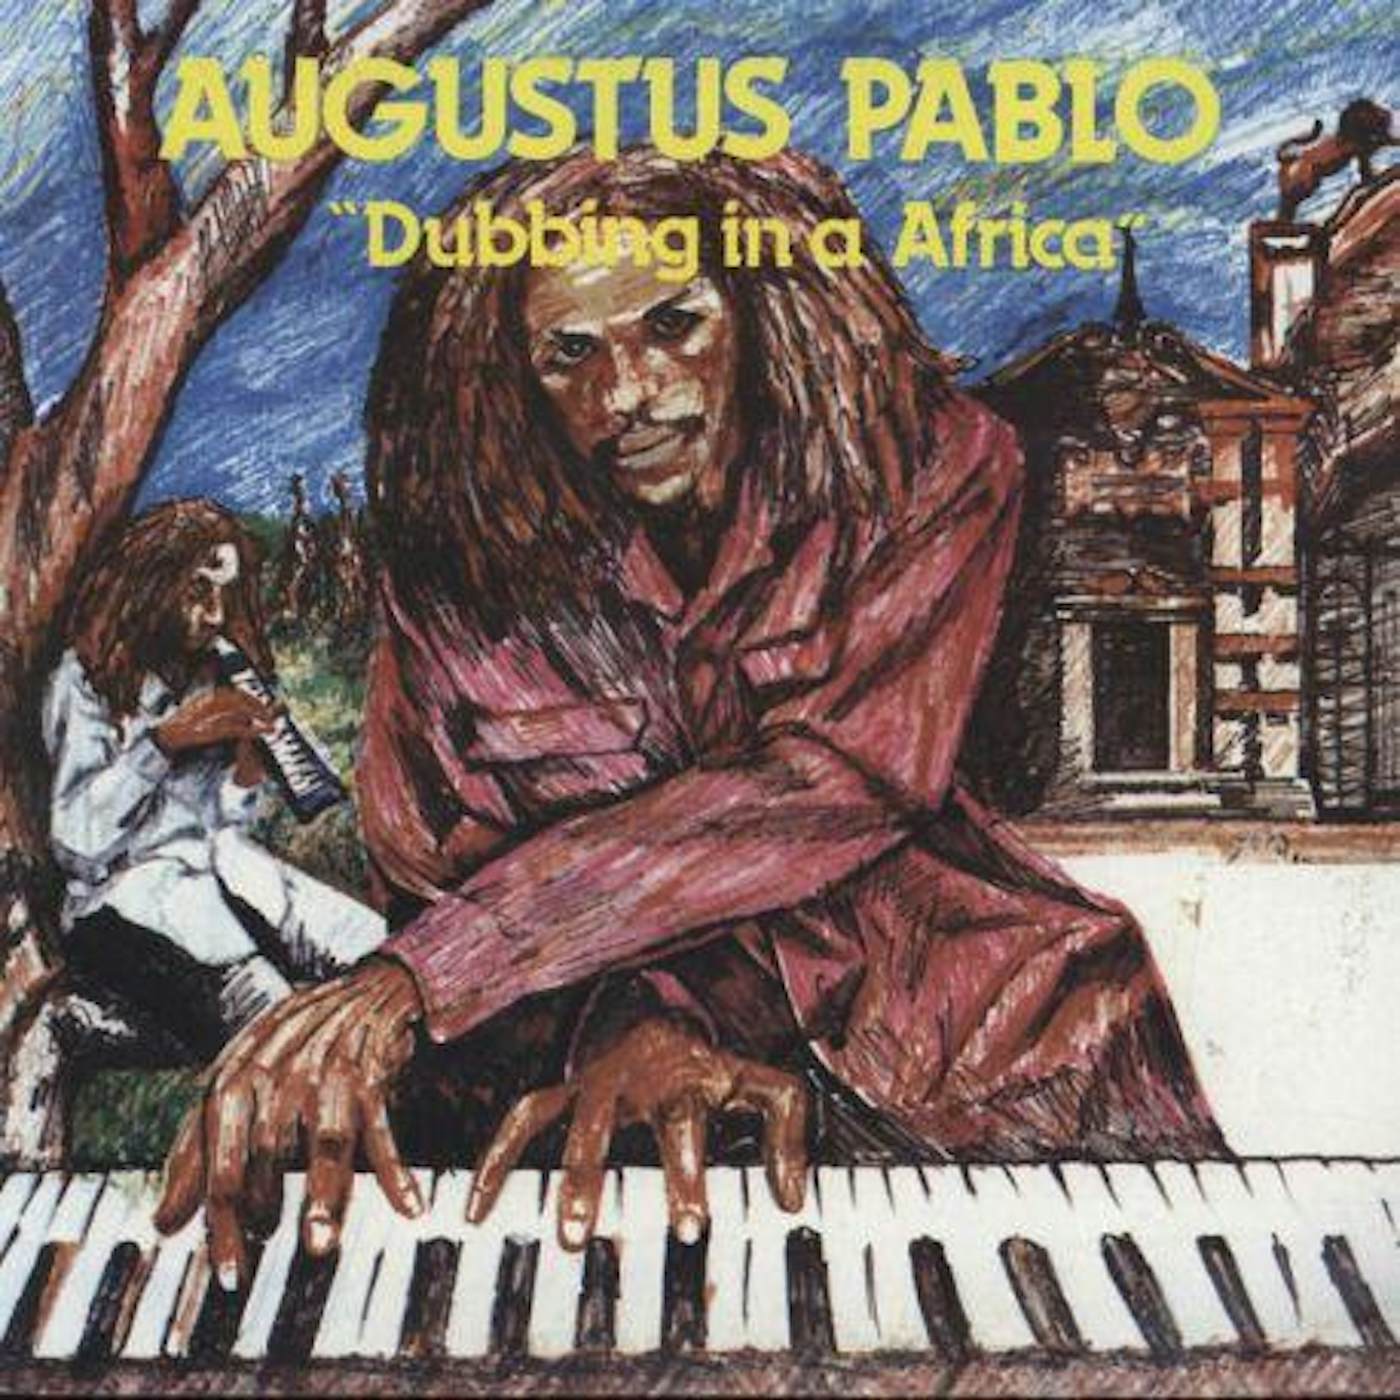 Augustus Pablo DUBBING IN A AFRICA Vinyl Record